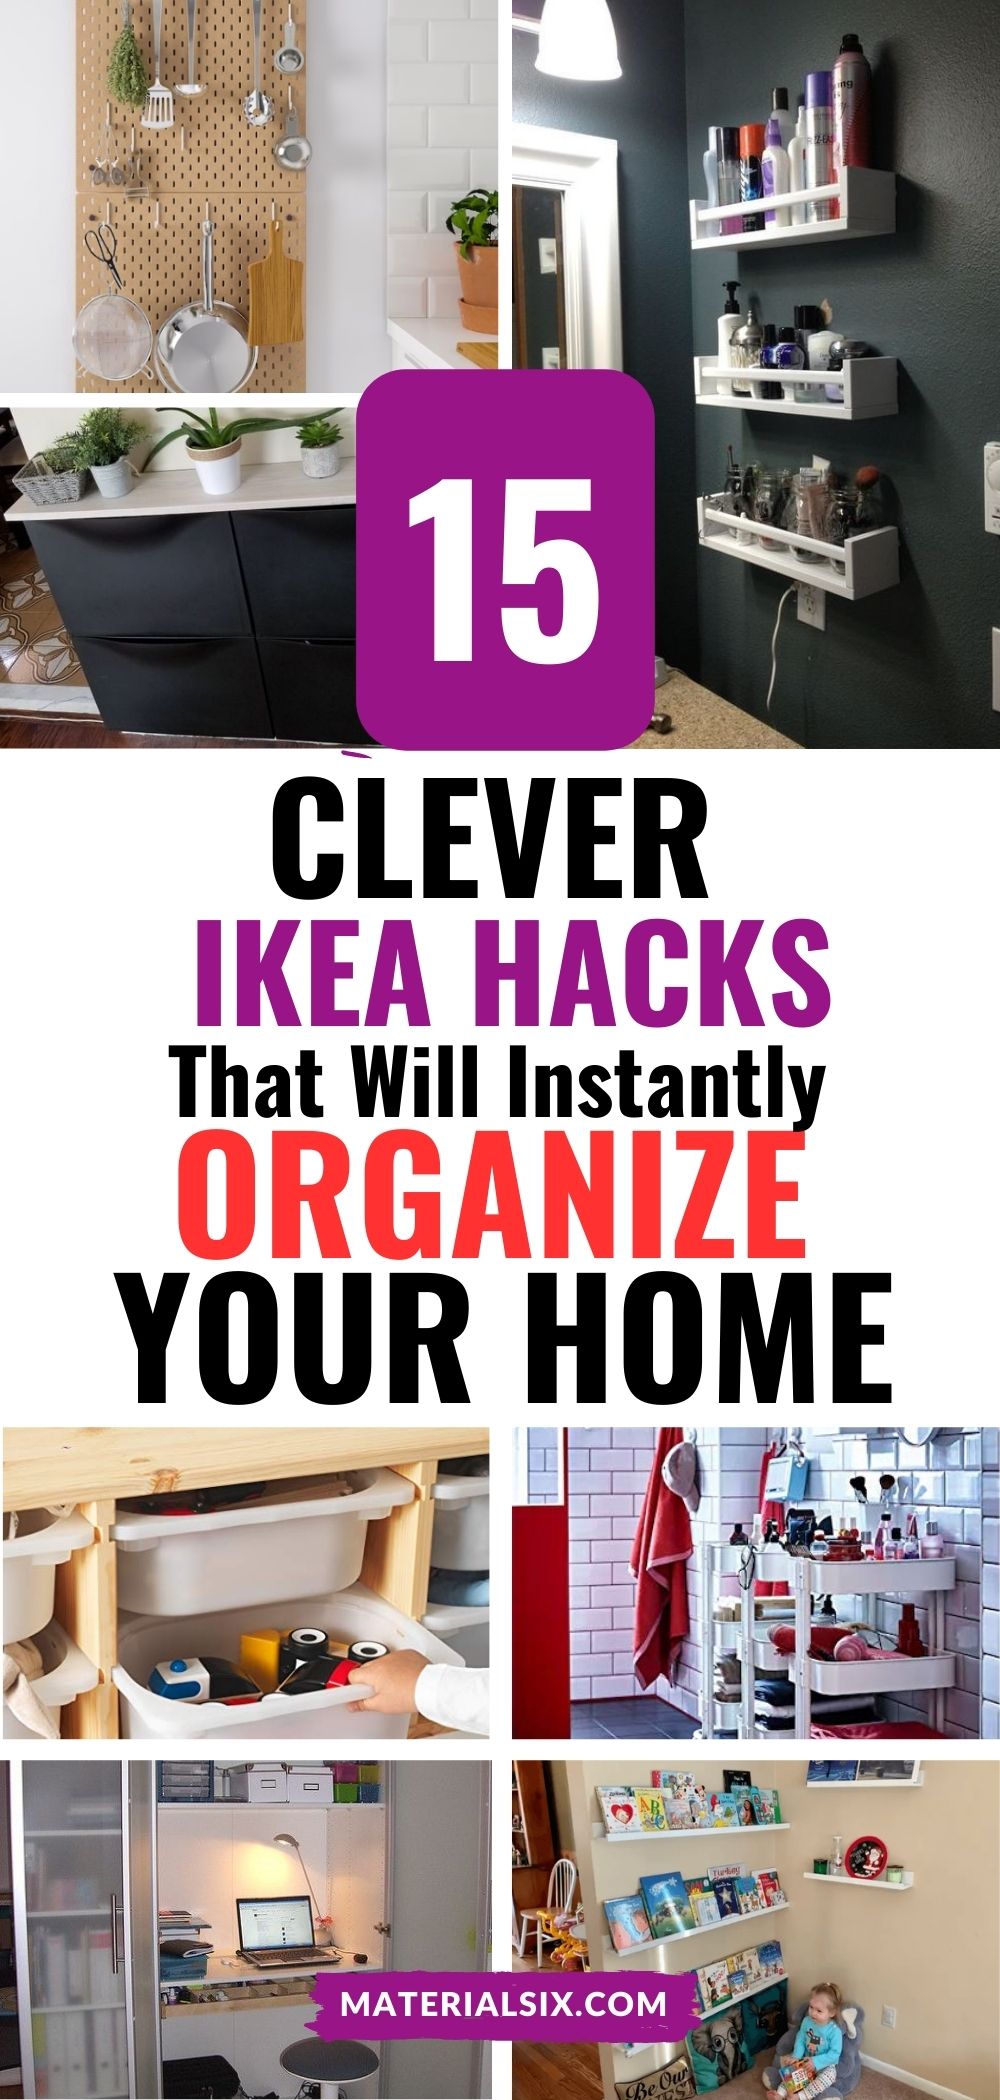 IKEA Hacks for a More Organized Home